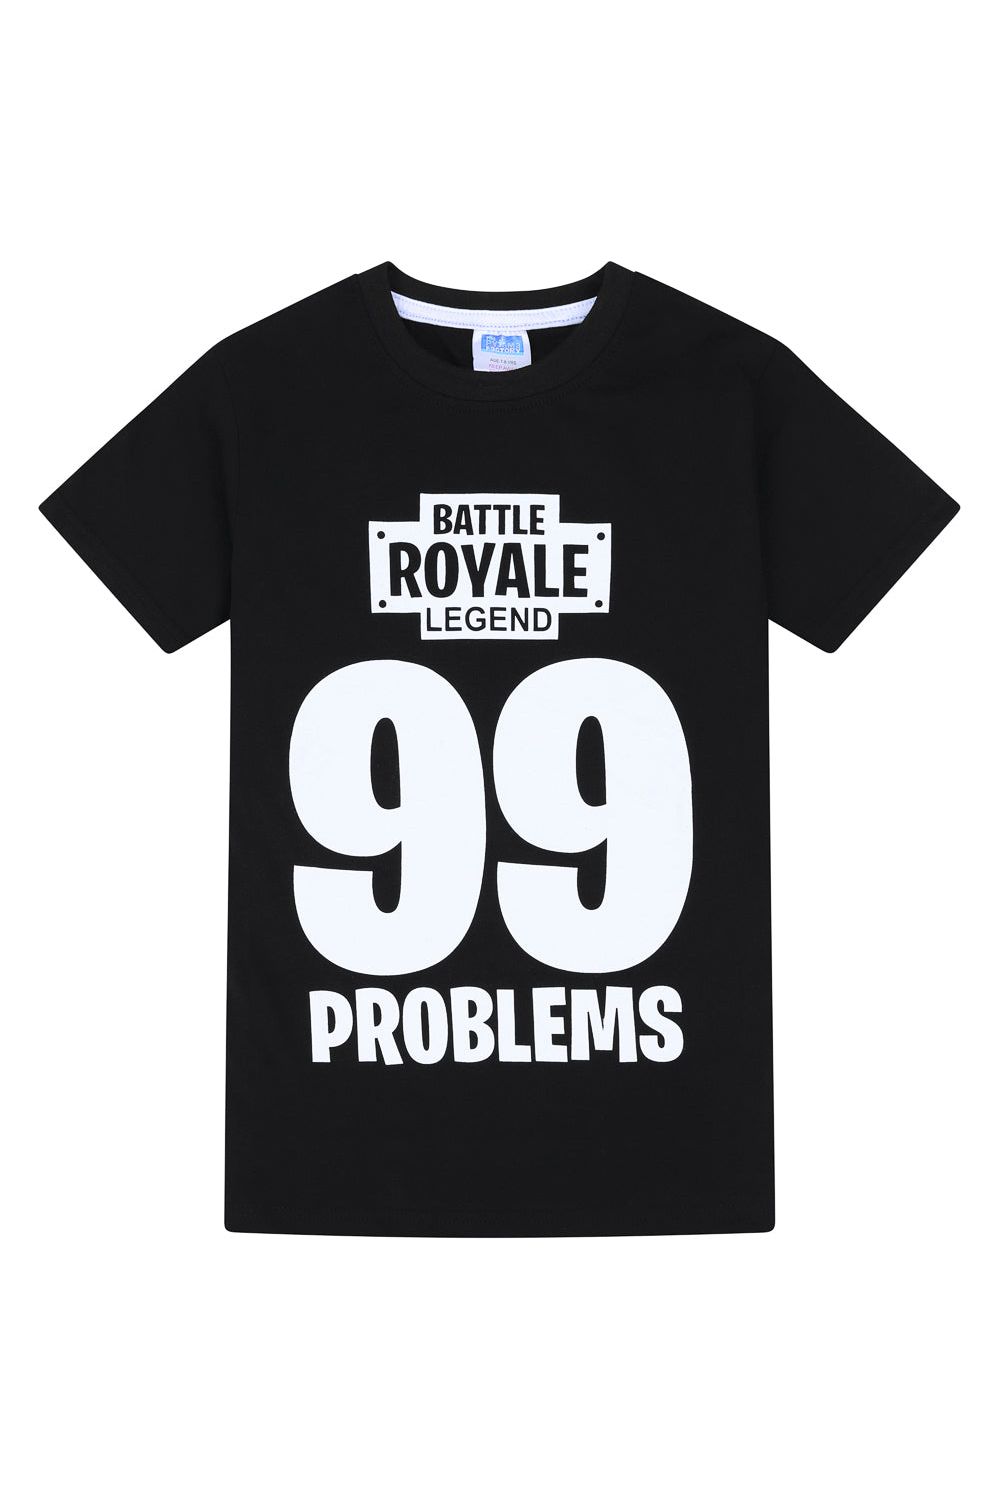 99 Problems Battle Royale Legend Short Pyjamas - Pyjamas.com